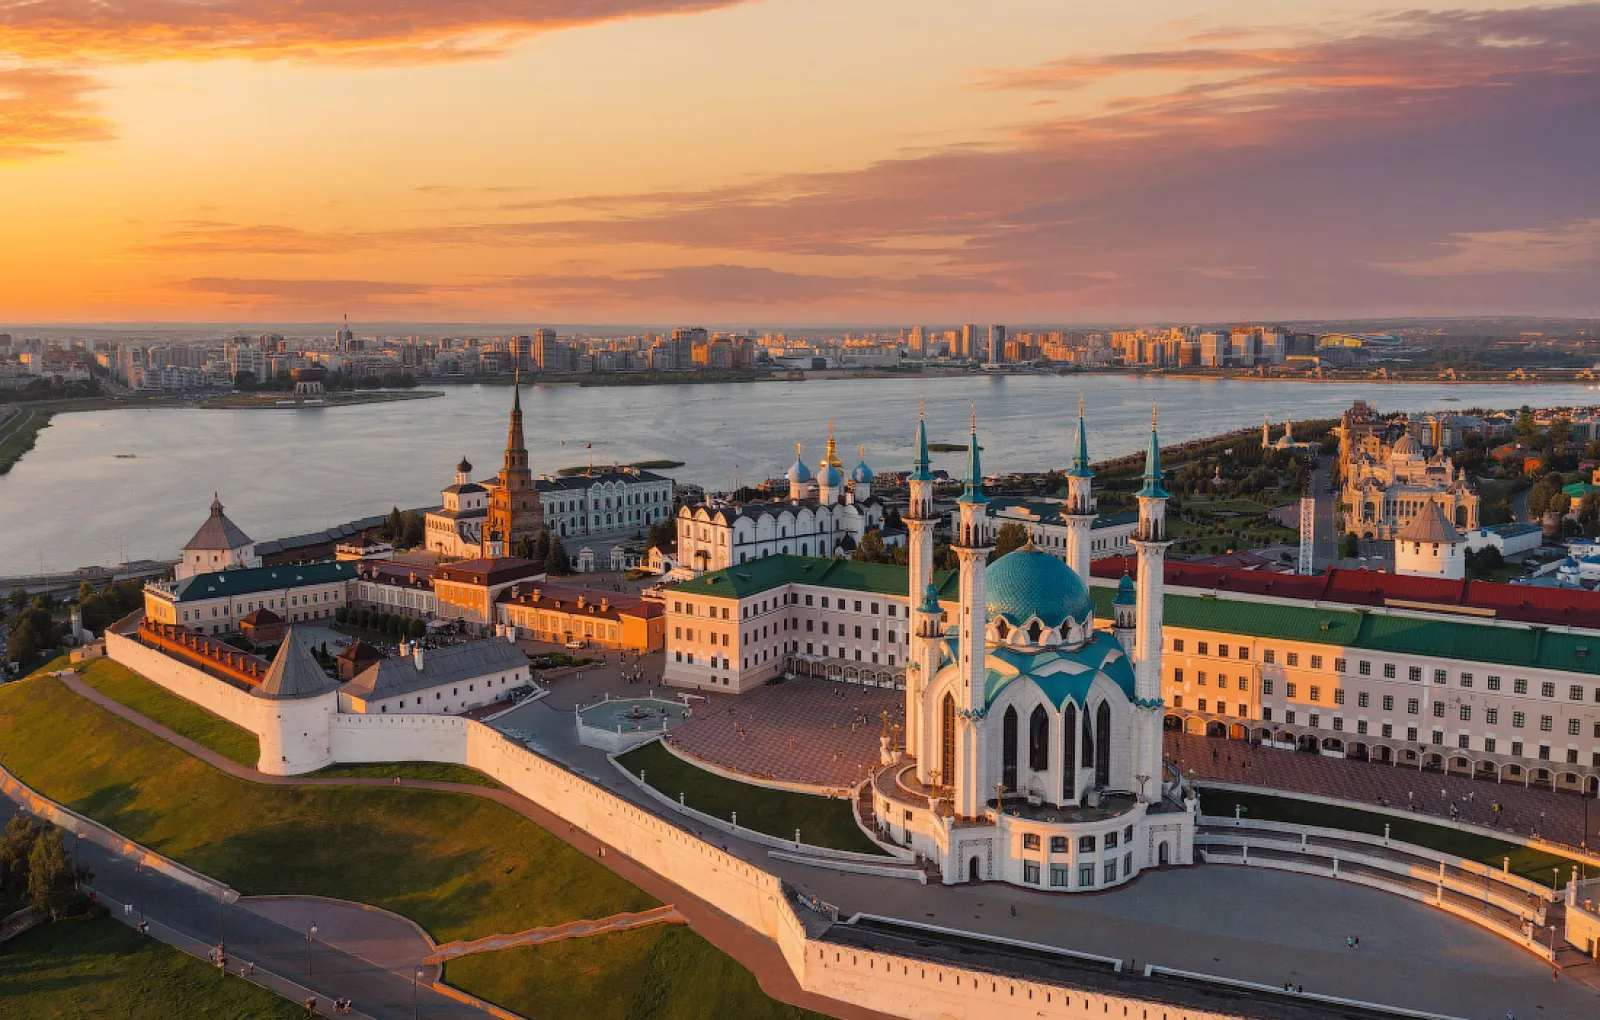 Birds eye view of the Kazan Kremlin on the embankment